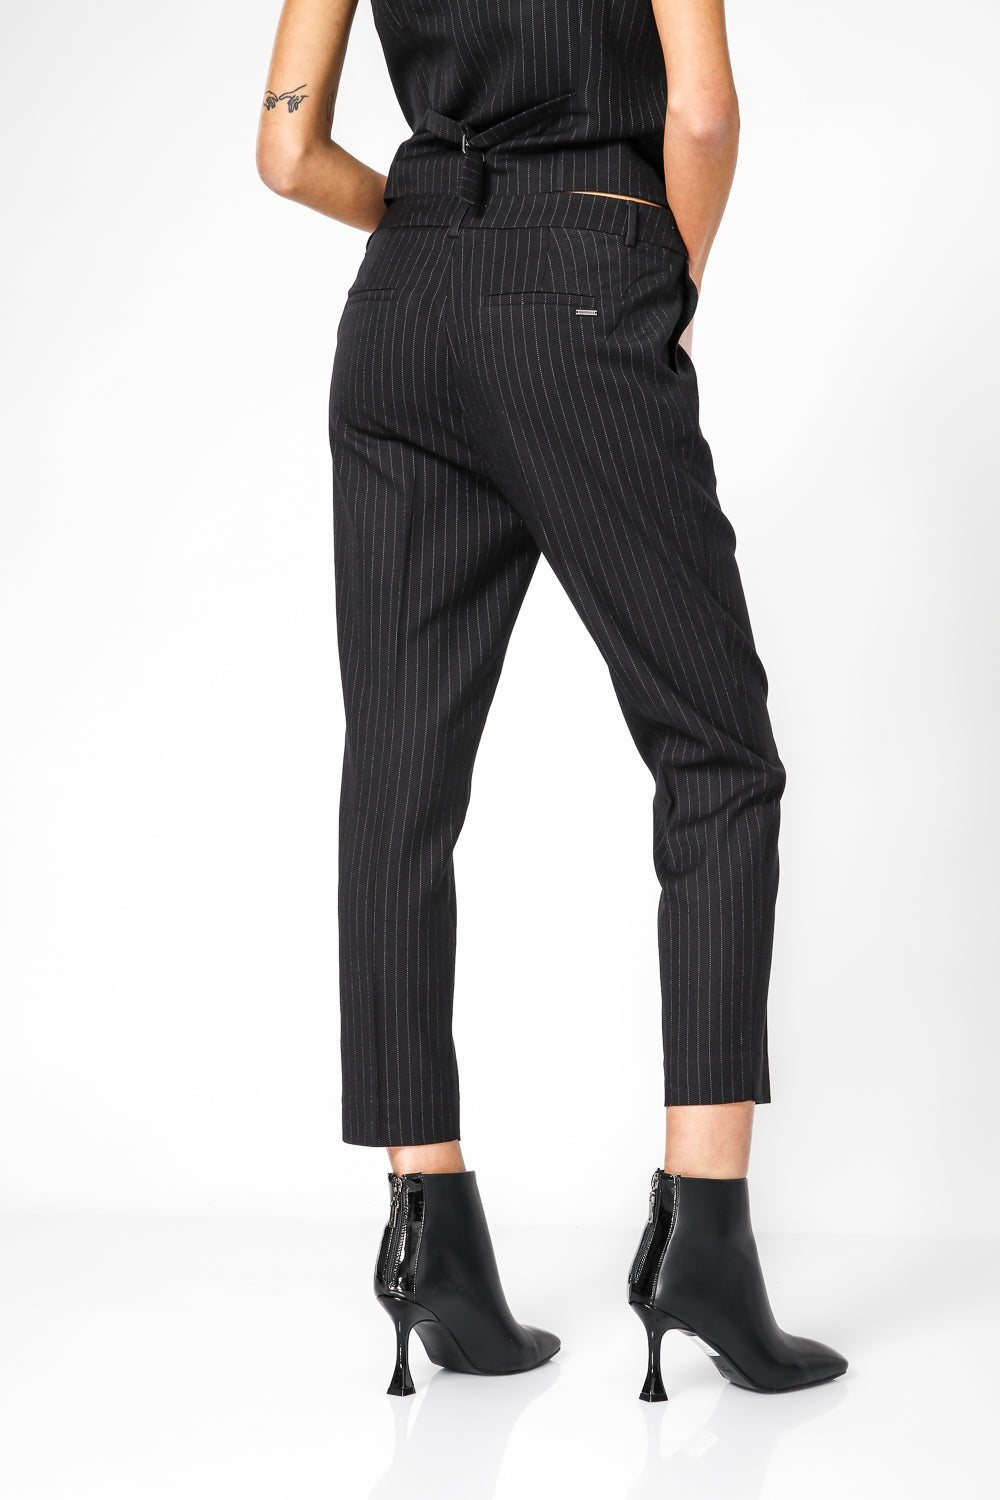 KENNETH COLE - מכנס אלגנט פס סיכה בצבע שחור - MASHBIR//365